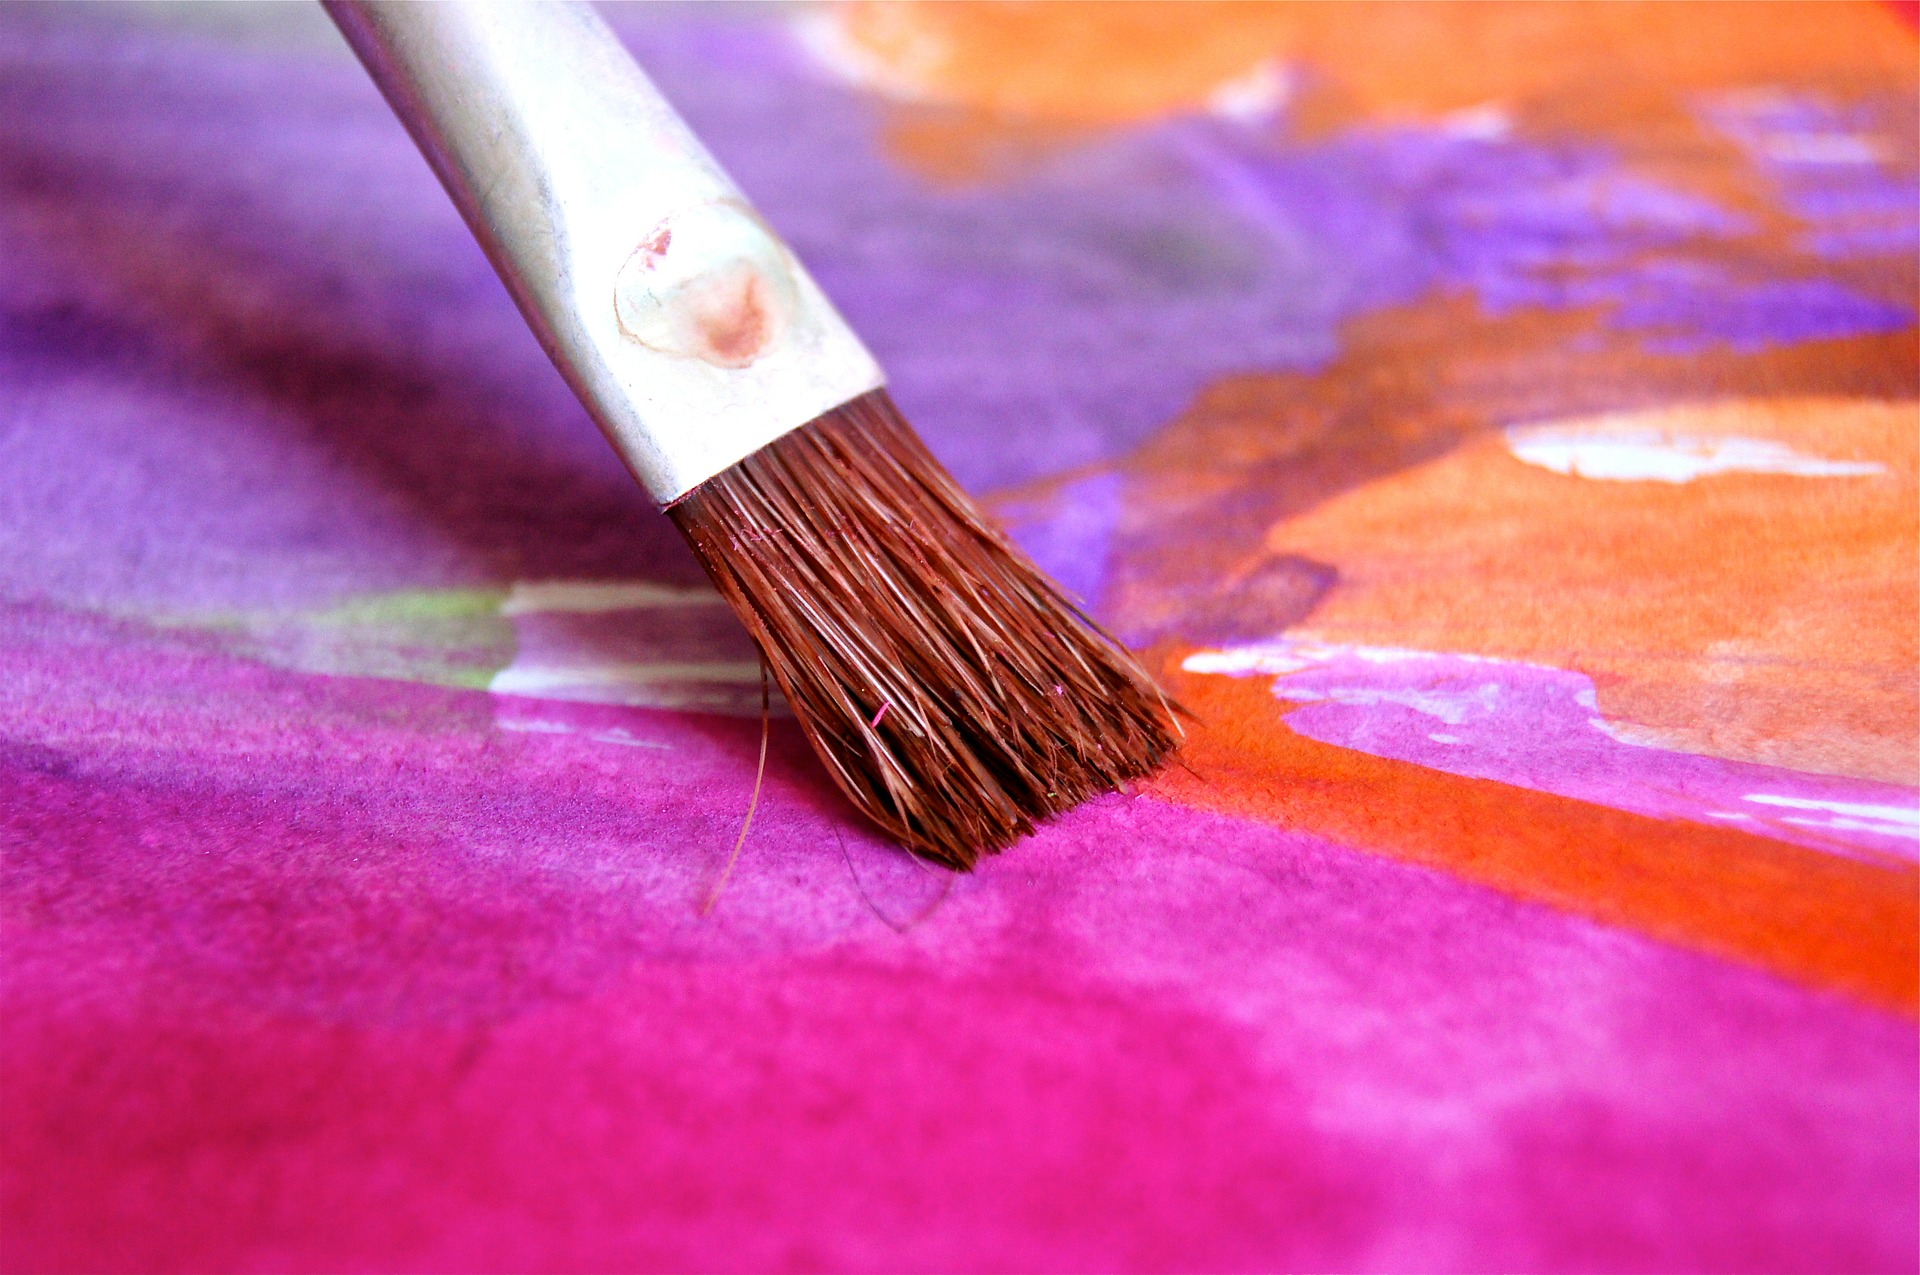 Paint brush on painting